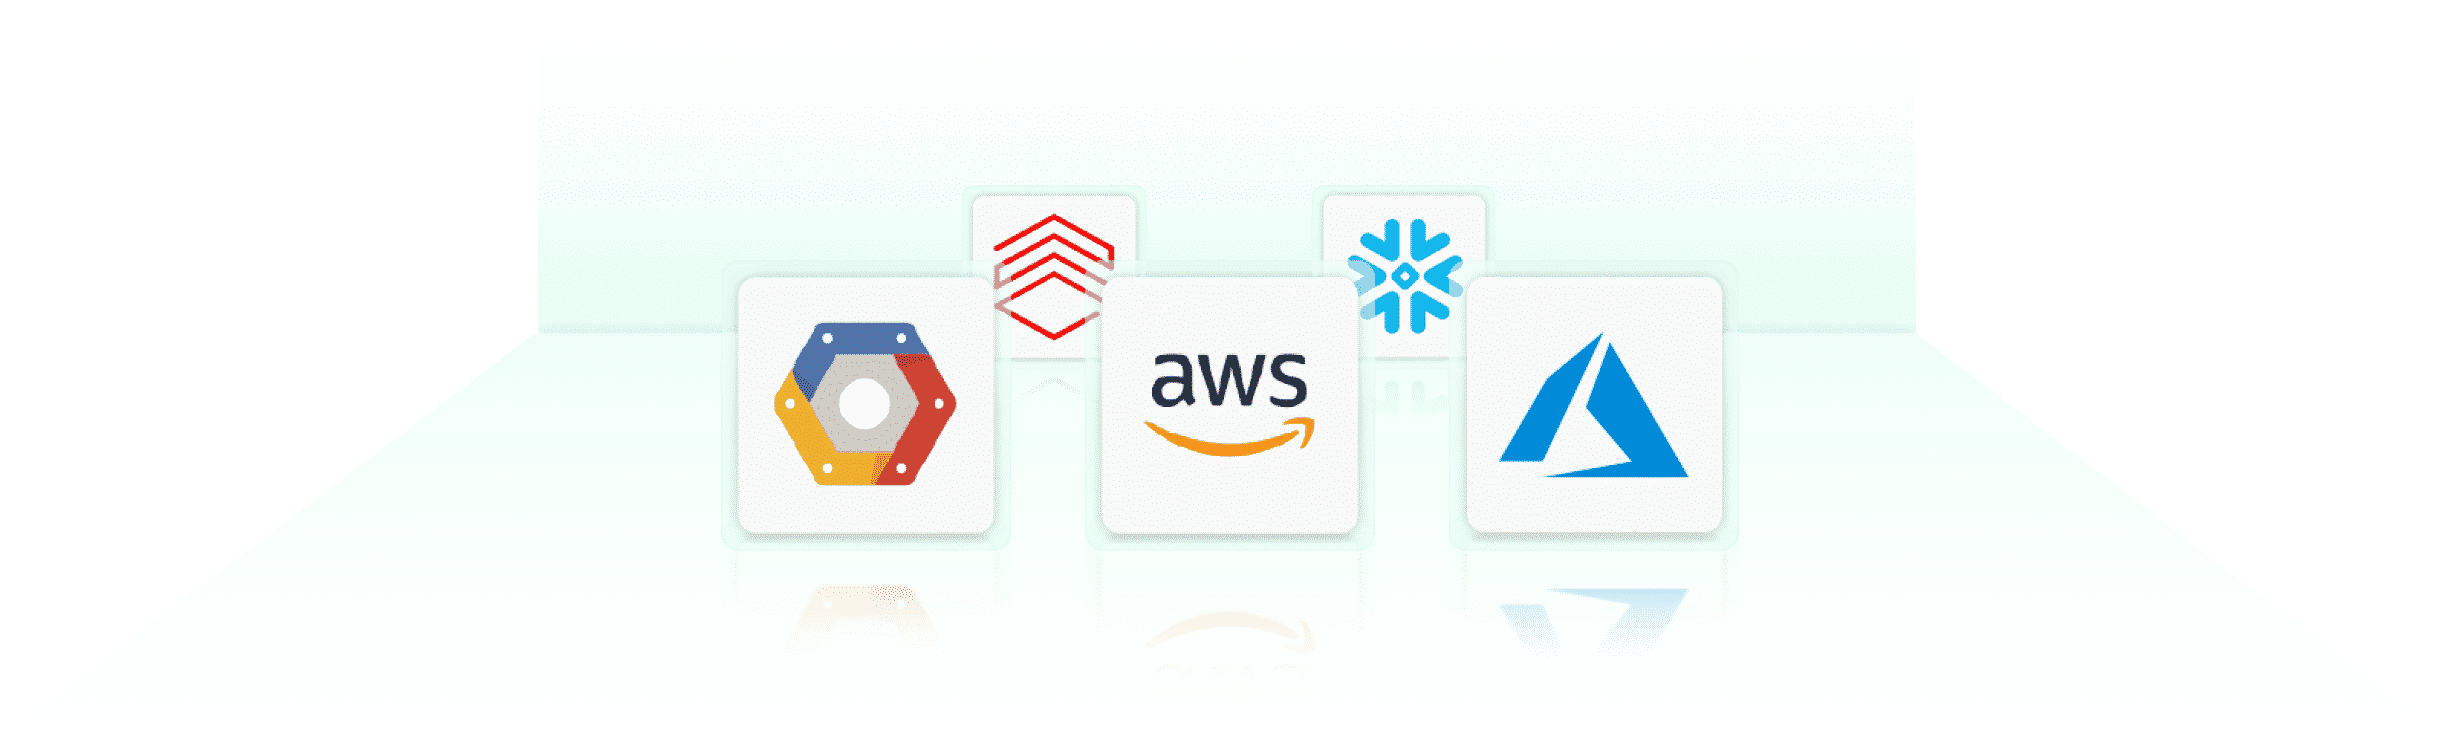 Providing powerful, consistent data security across AWS, Azure, Google Cloud Platform, Snowflake, and Databricks